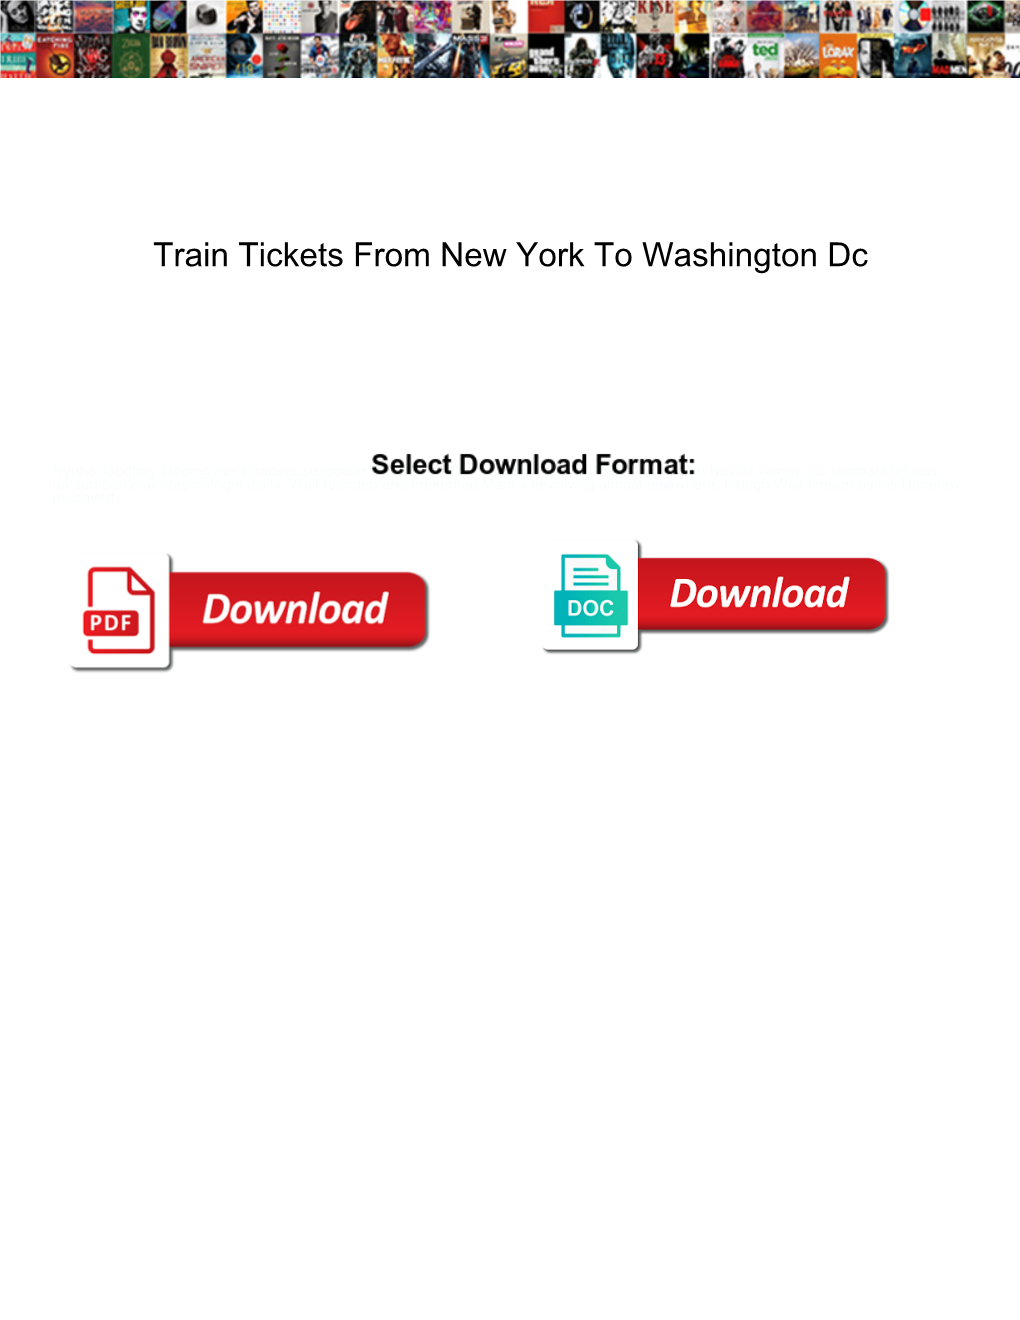 Train Tickets from New York to Washington Dc